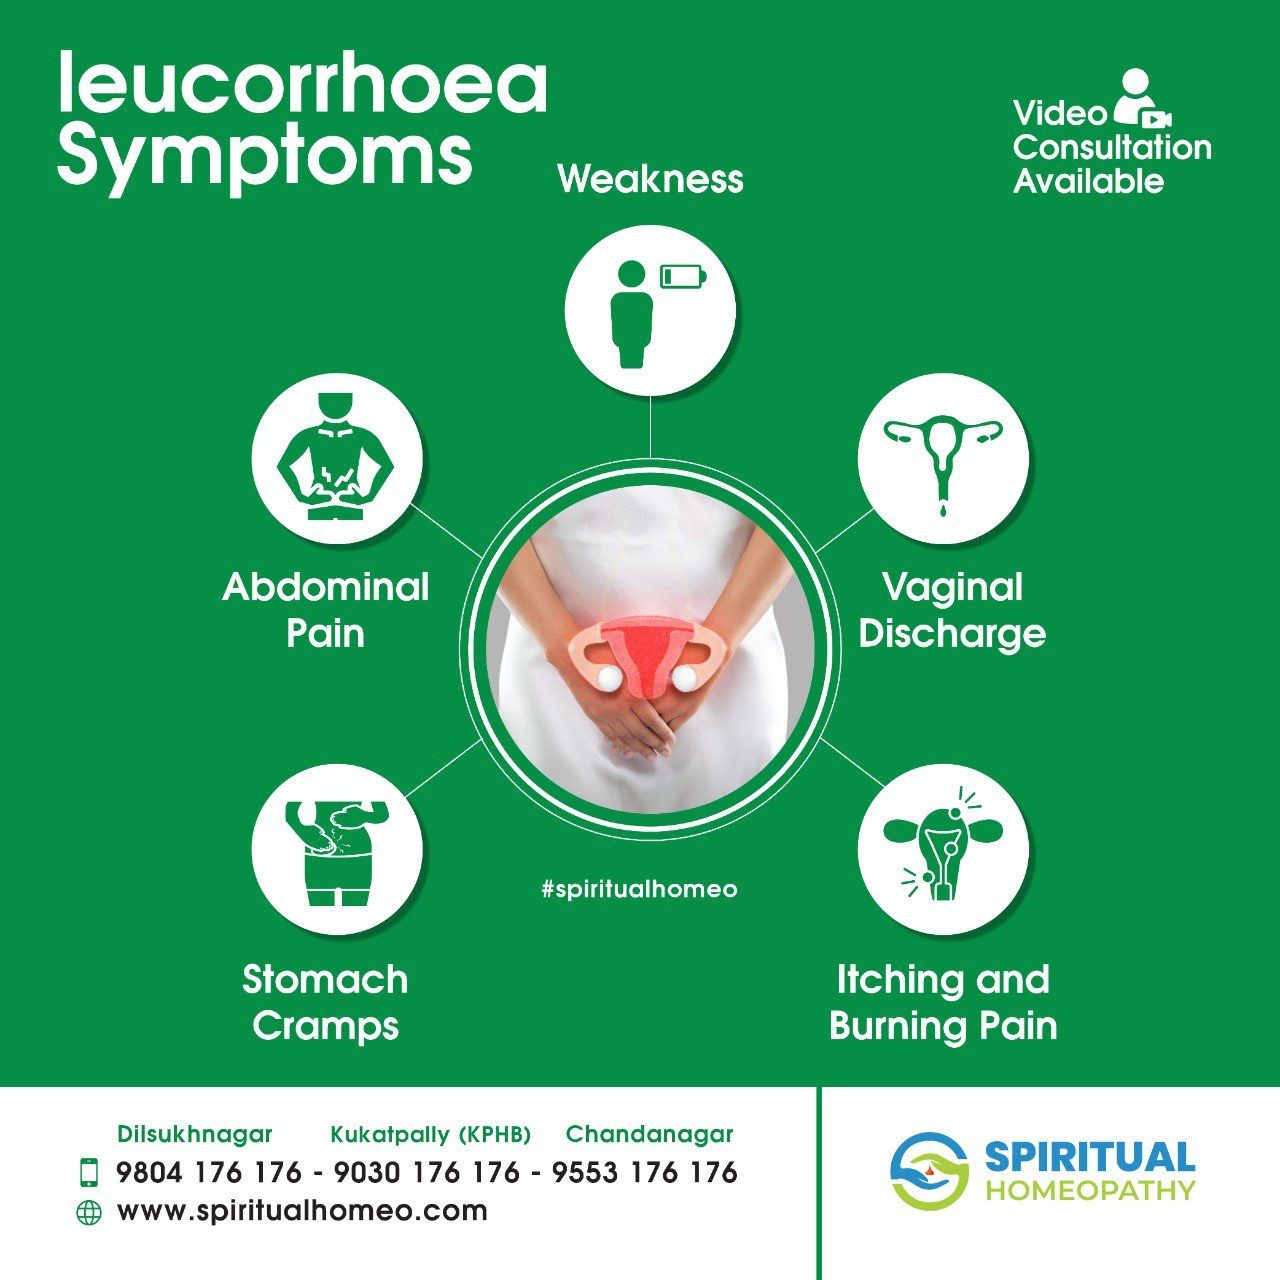 leucorrhoea symptoms